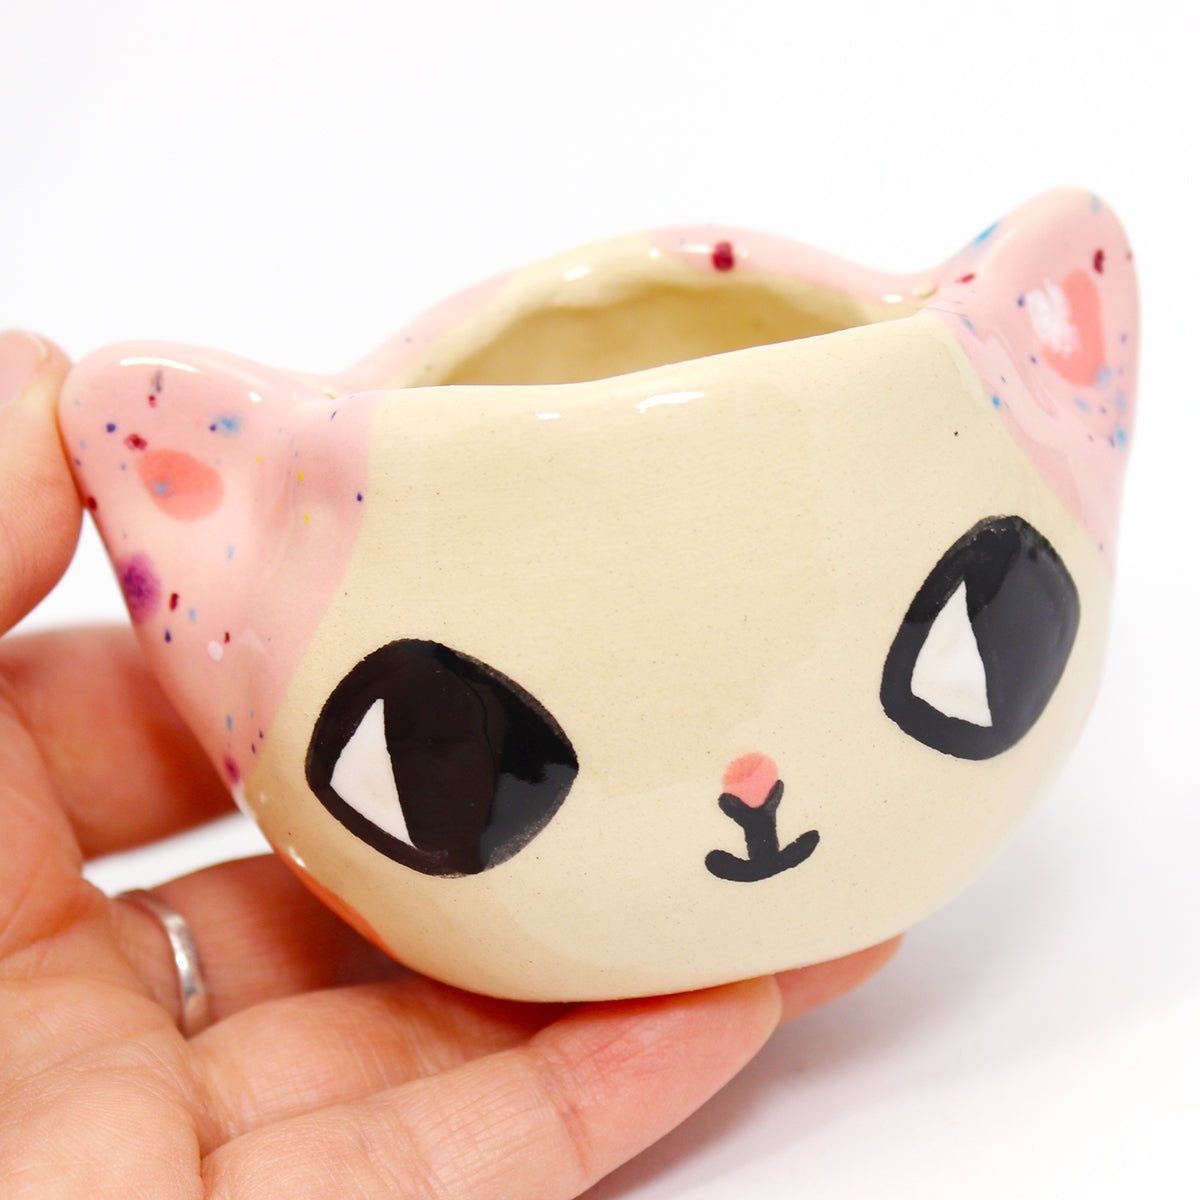 Ceramic Kitty Planter Pot Small - #2169